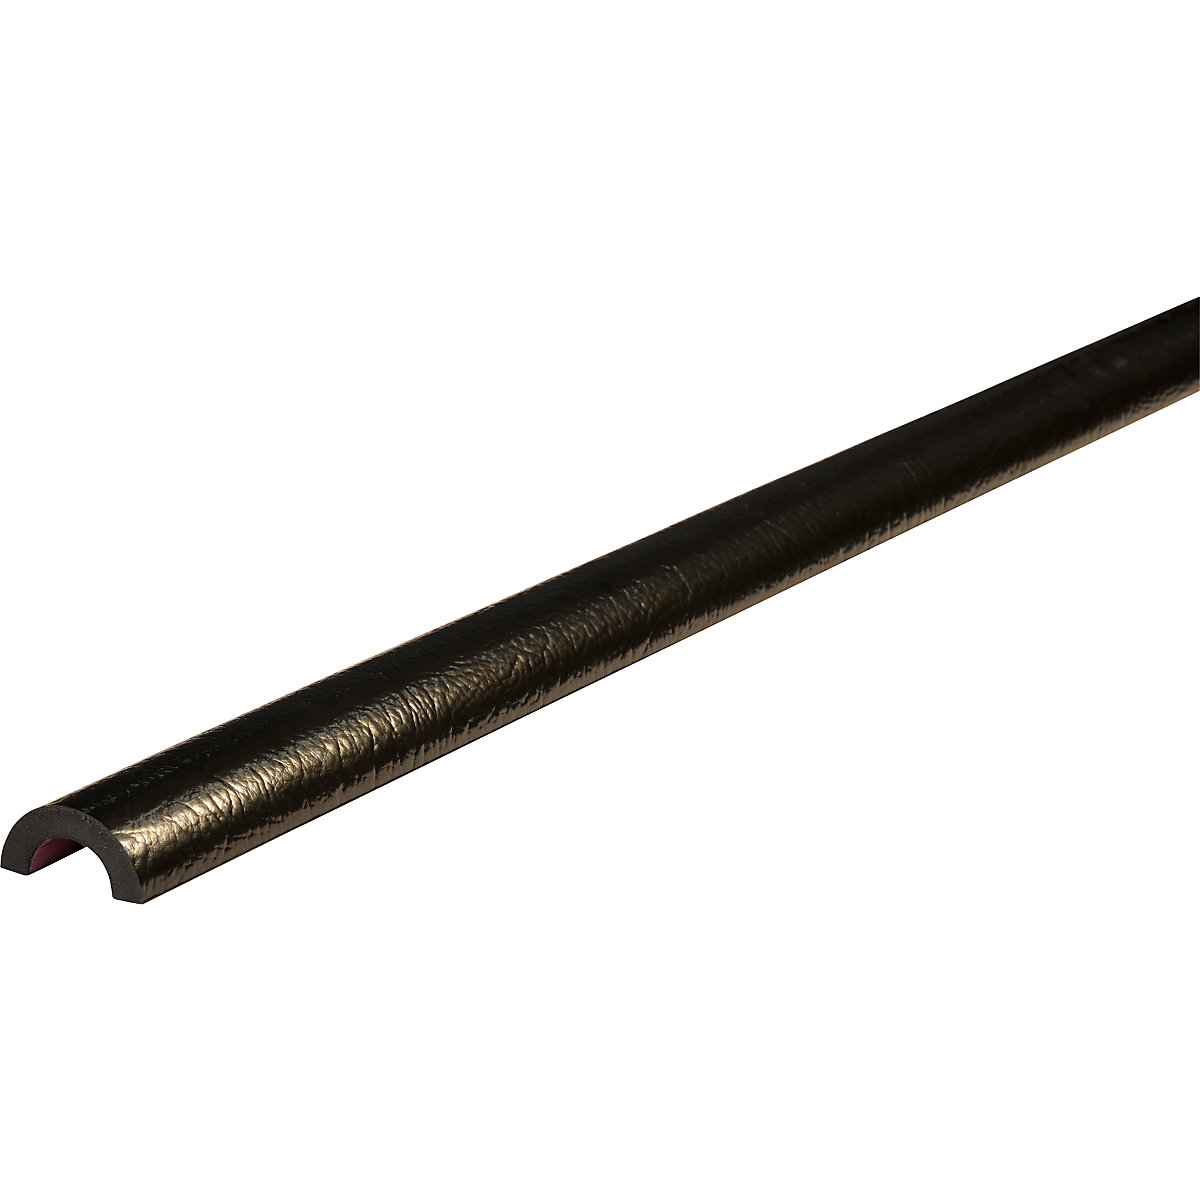 Proteção de tubos Knuffi® – SHG, tipo R30, corte individual, por metro corrente, preto-12